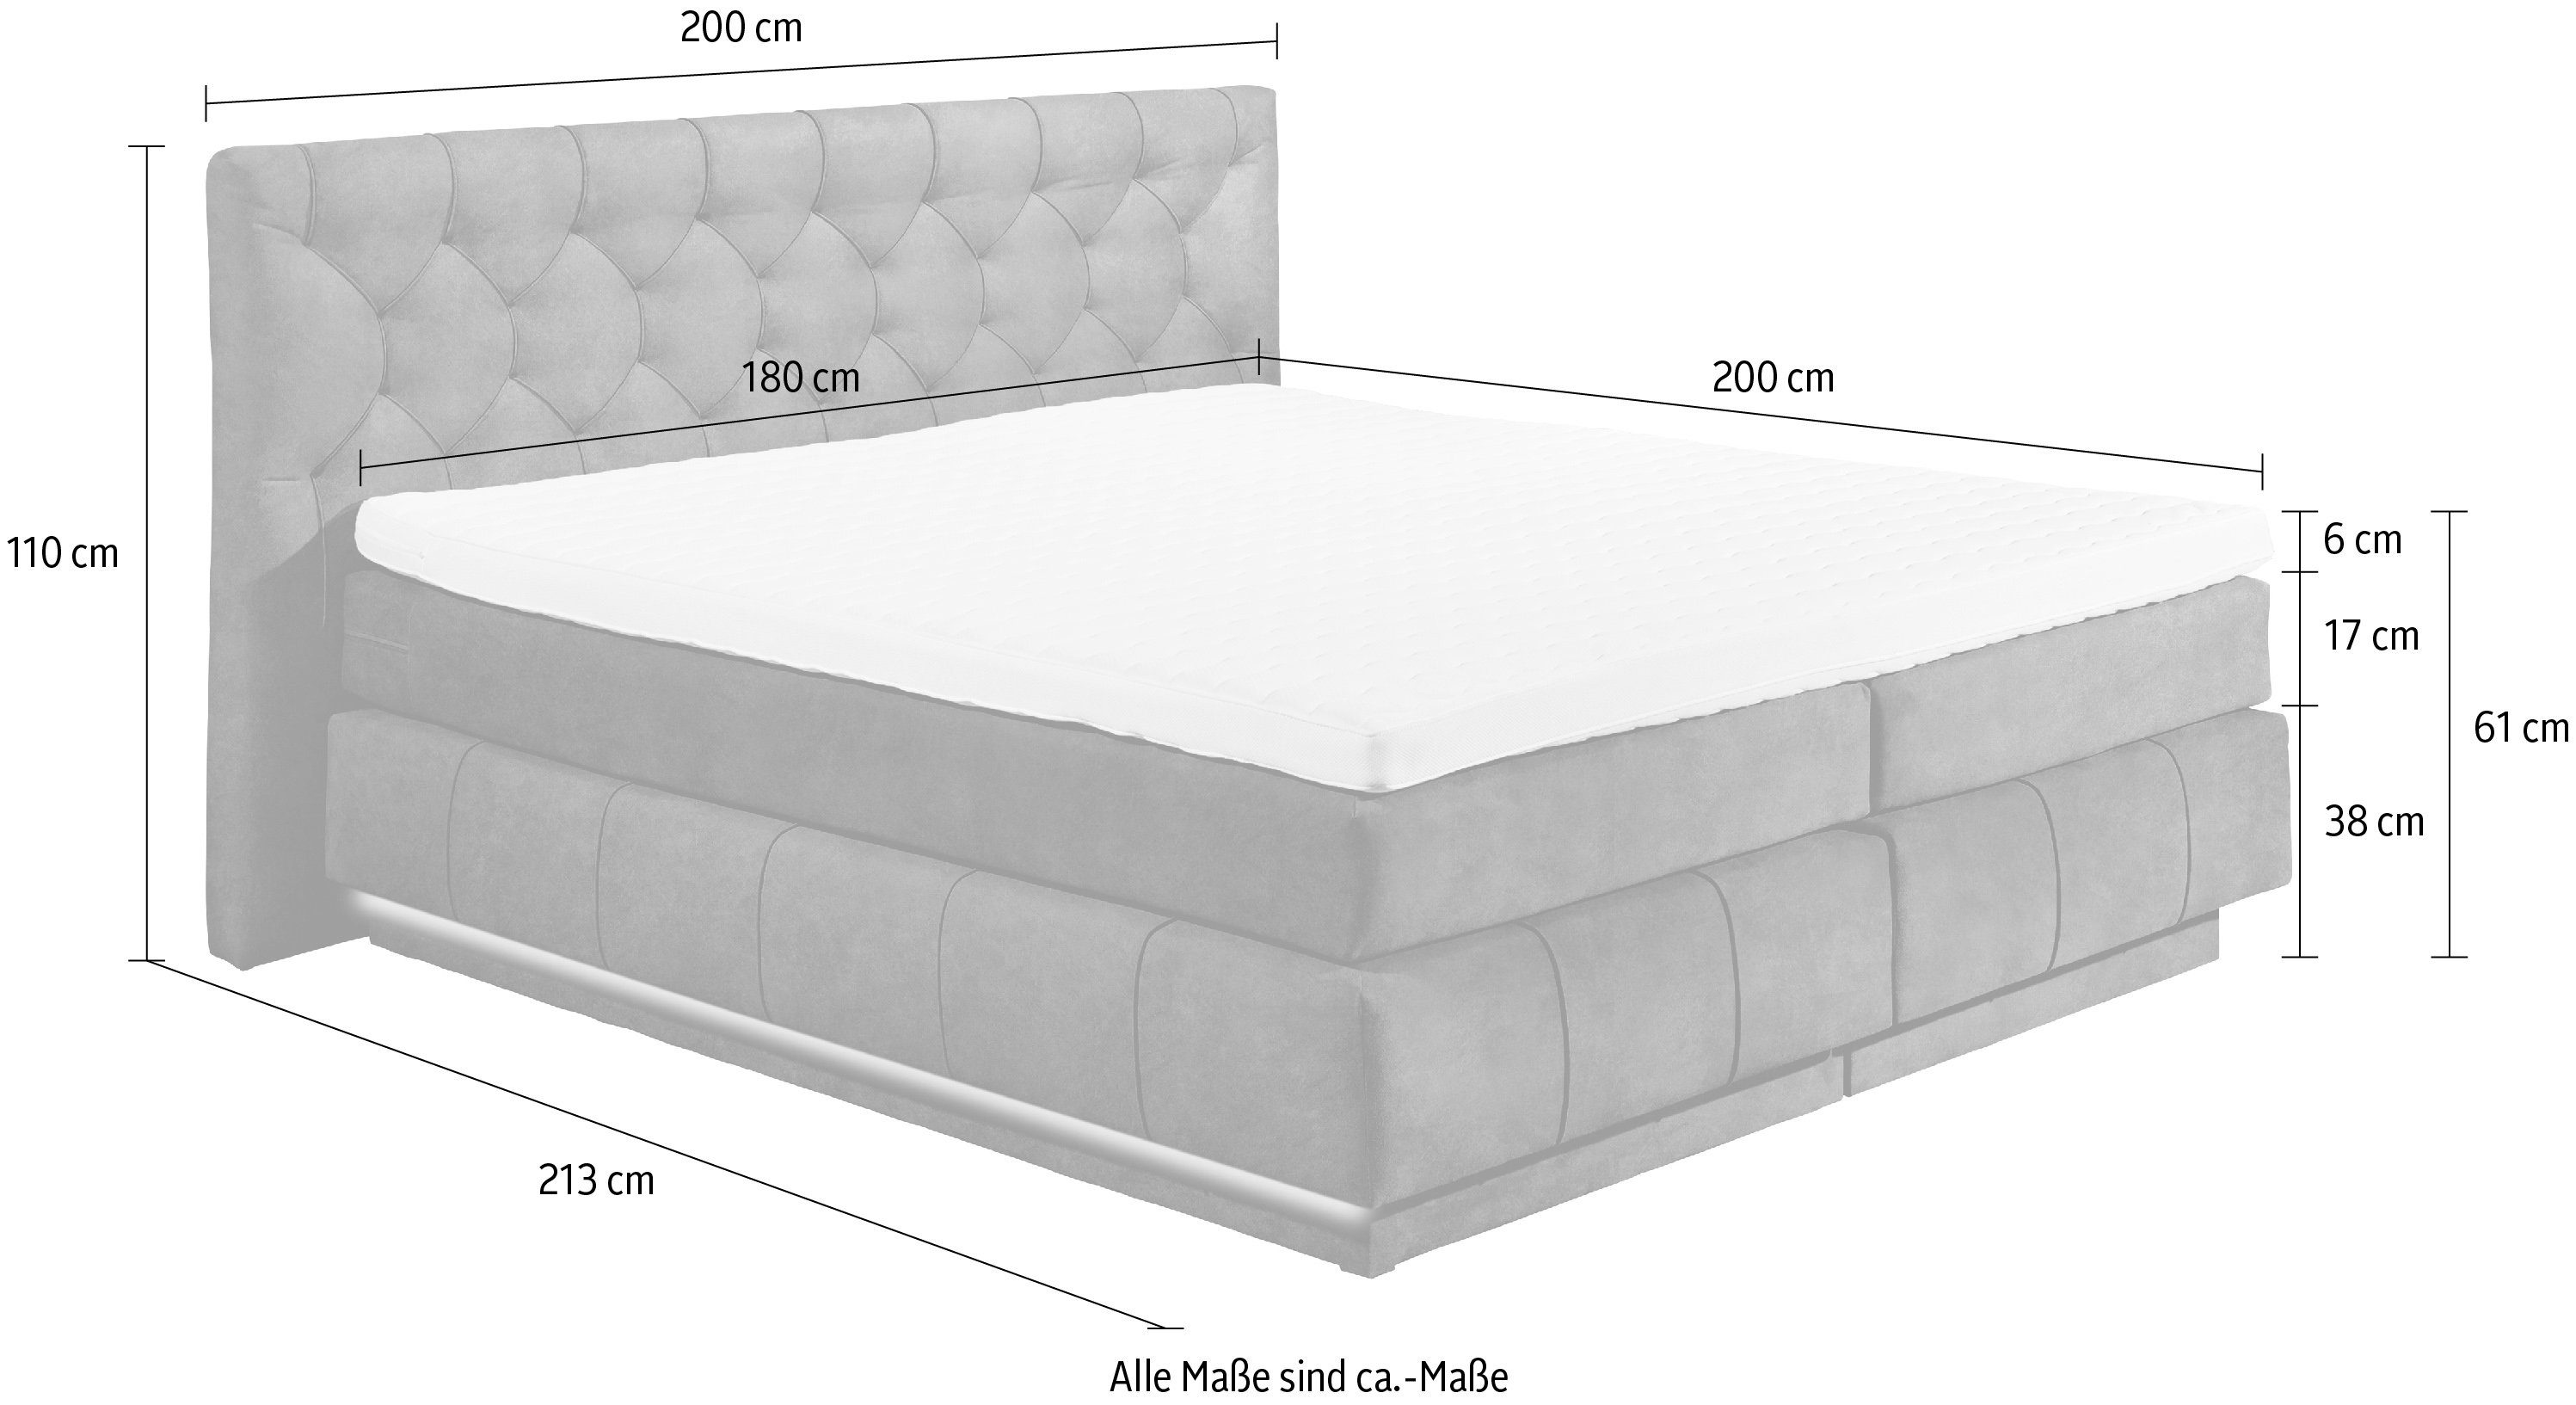 Florenz, ED inkl. mit dunkelbraun DESIGN LED-Leiste schwebenden zwei EXCITING Boxspringbett Bettkästen, wahlweise